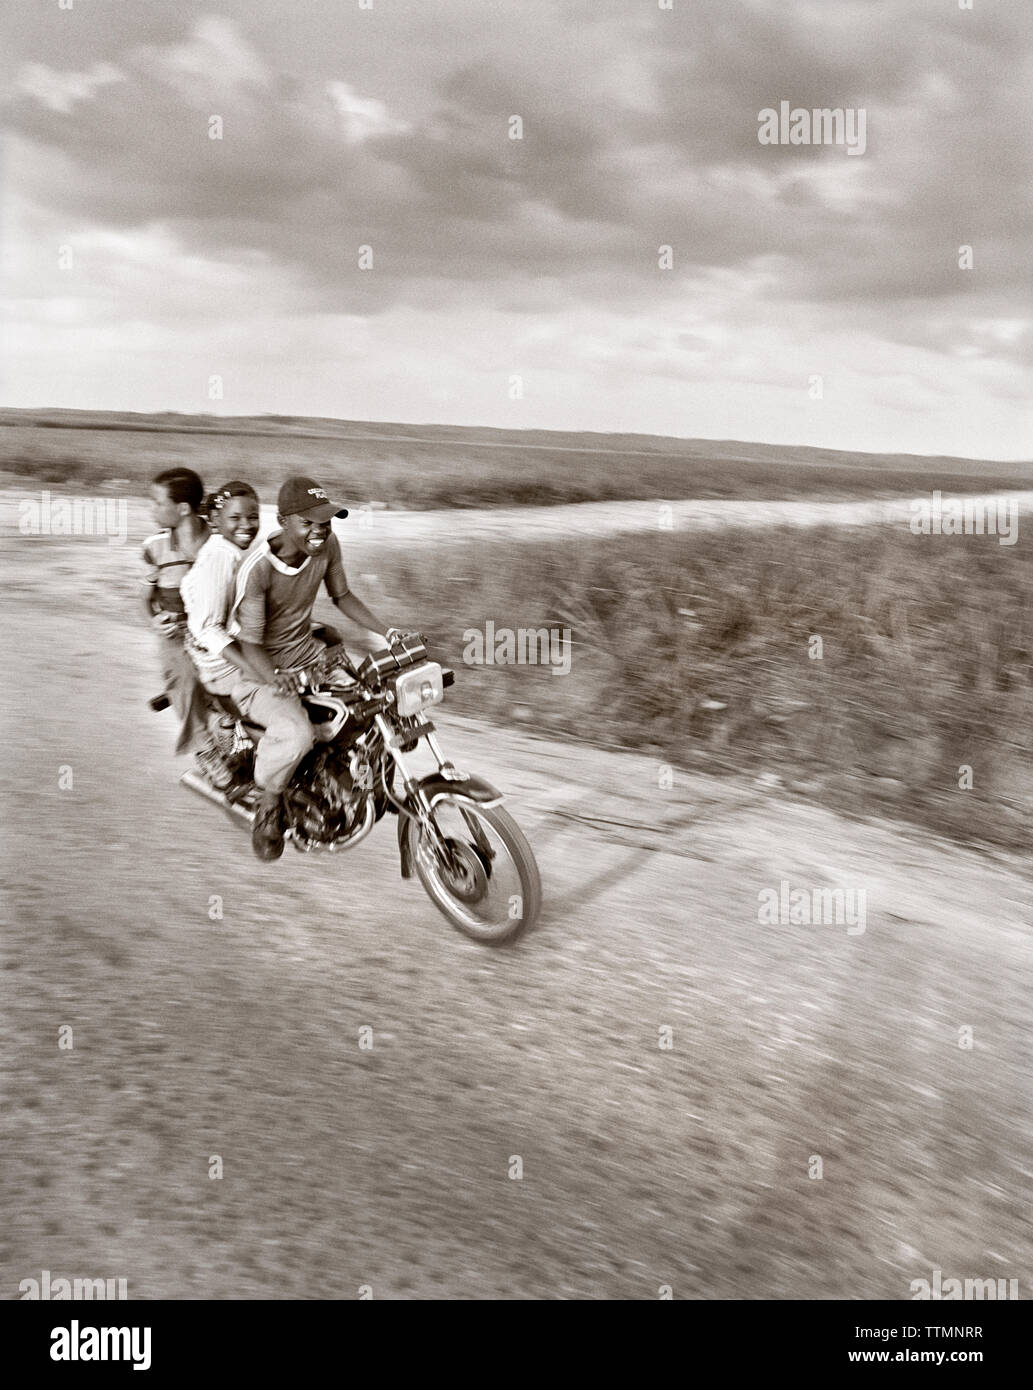 DOMINICAN REPUBLIC, three friends enjoying a motorcycle ride on a rural road near Casa de Campo (B&W) Stock Photo